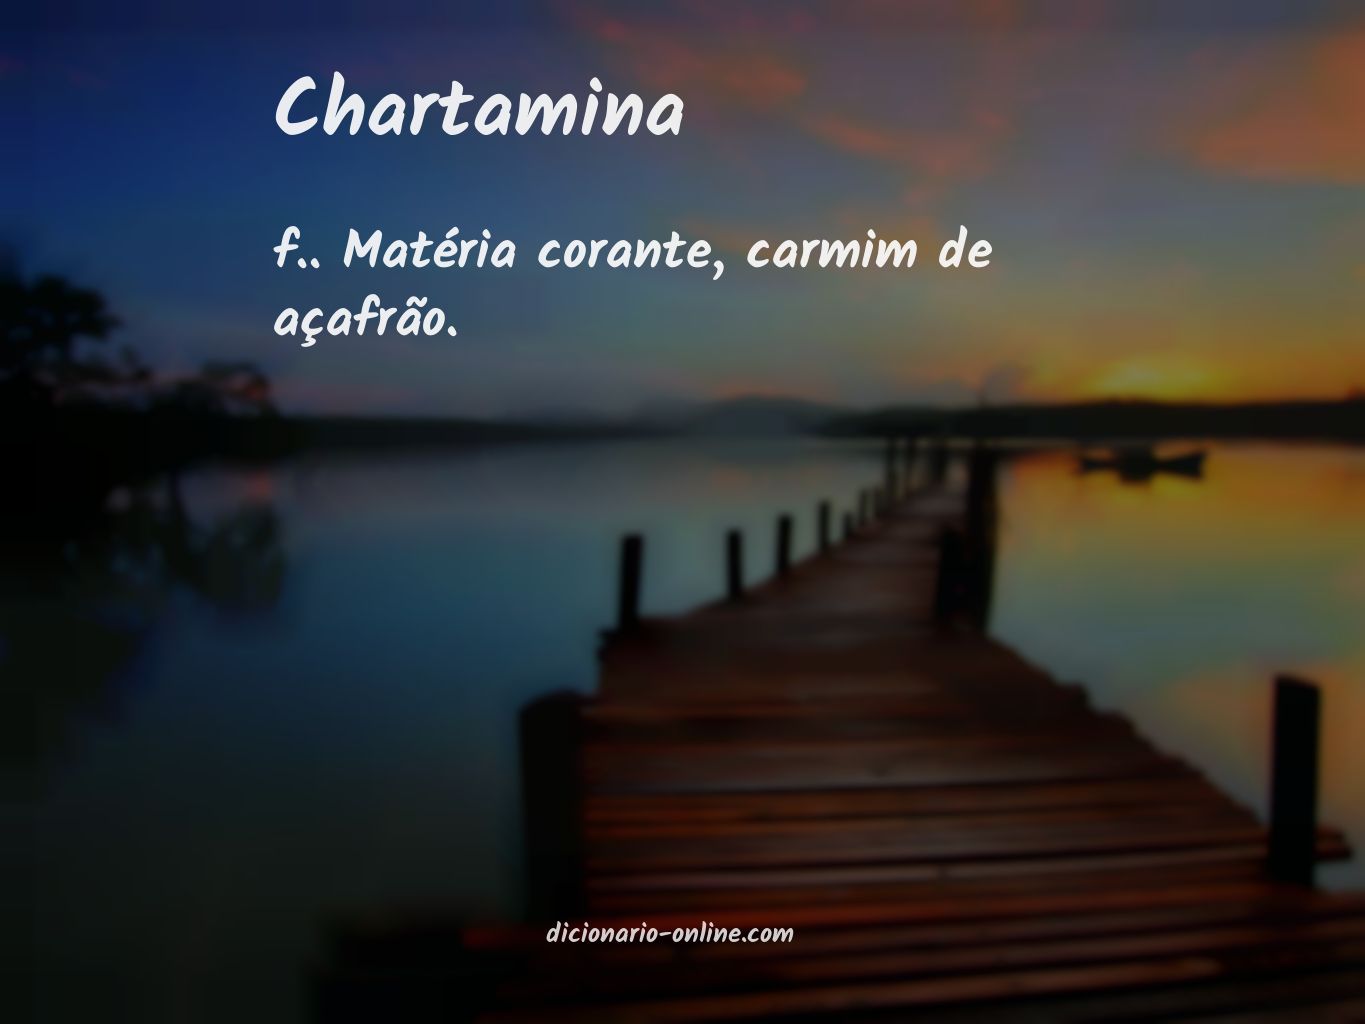 Significado de chartamina